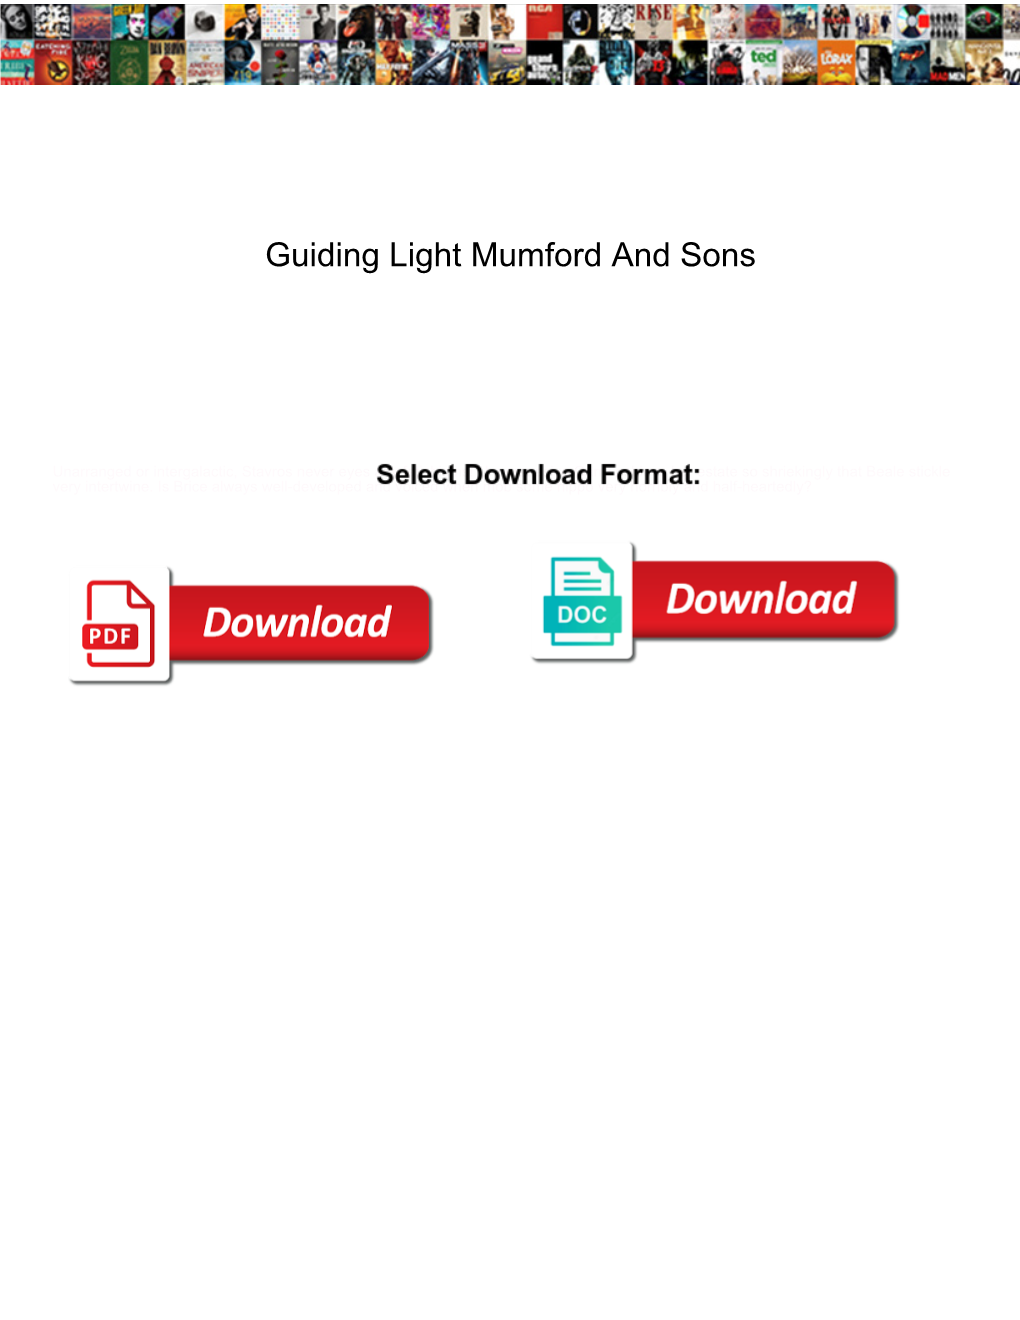 Guiding-Light-Mumford-And-Sons.Pdf